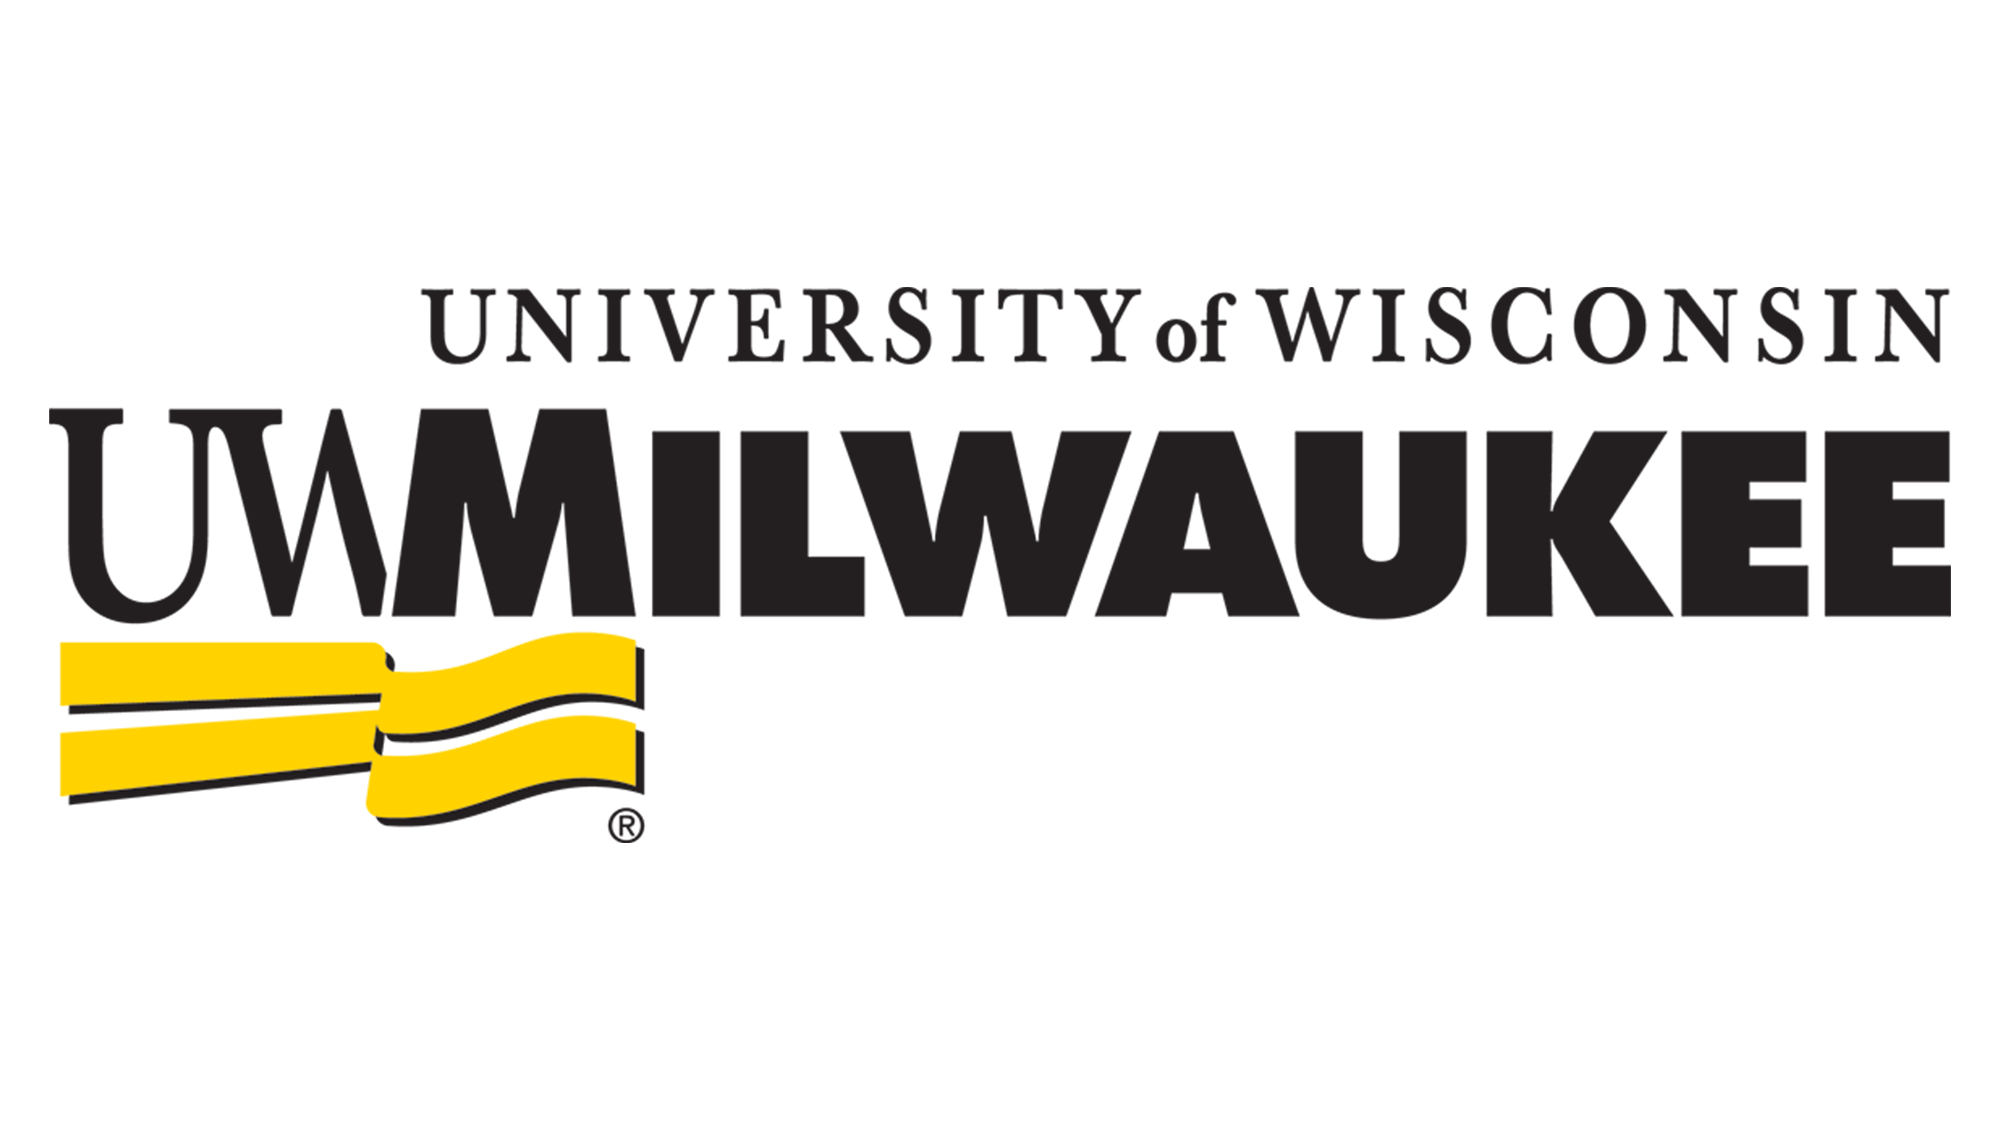 University of Wisconsin - Milwaukee